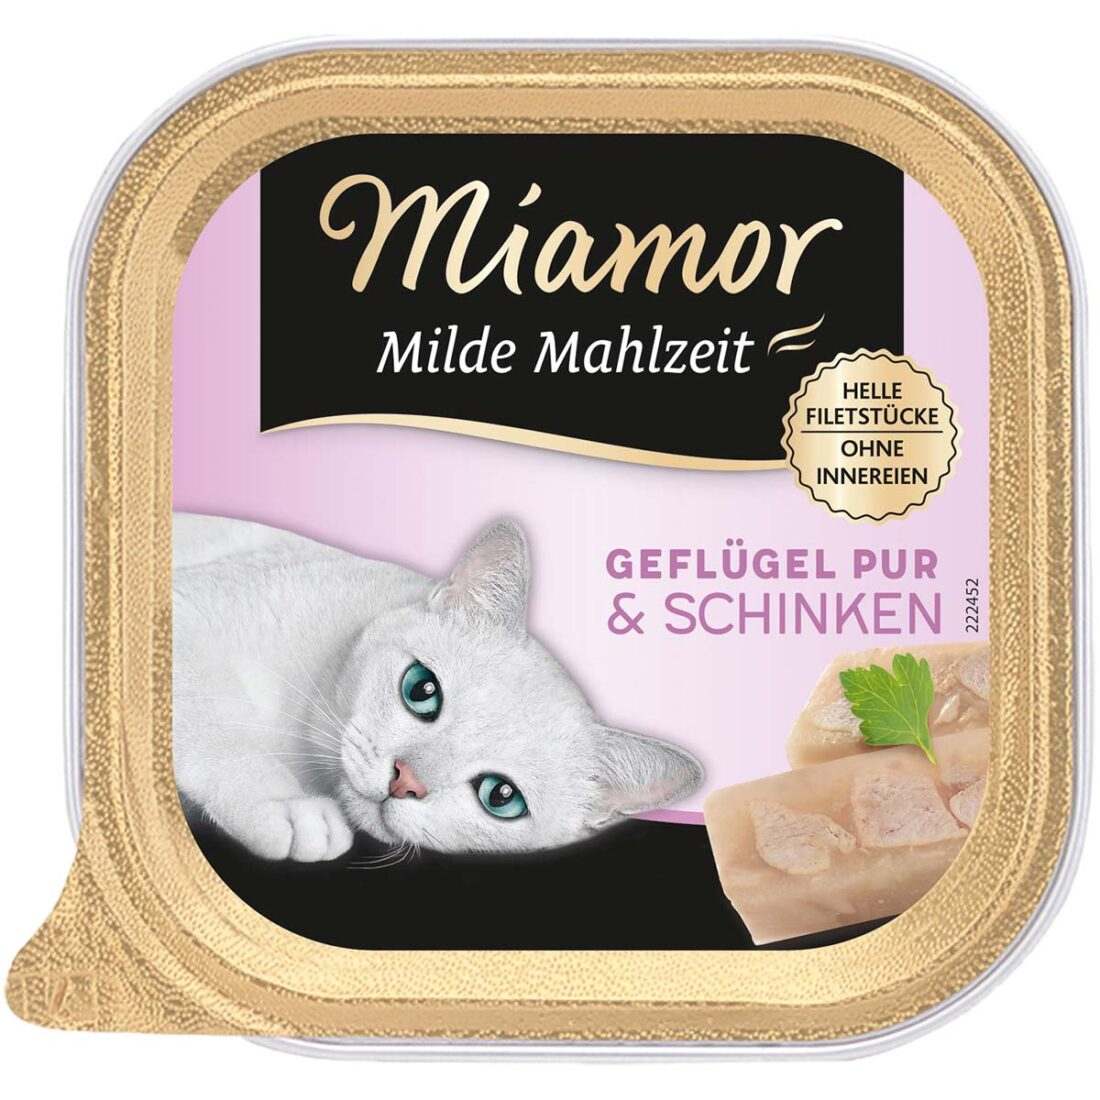 Miamor Milde Mahlzeit